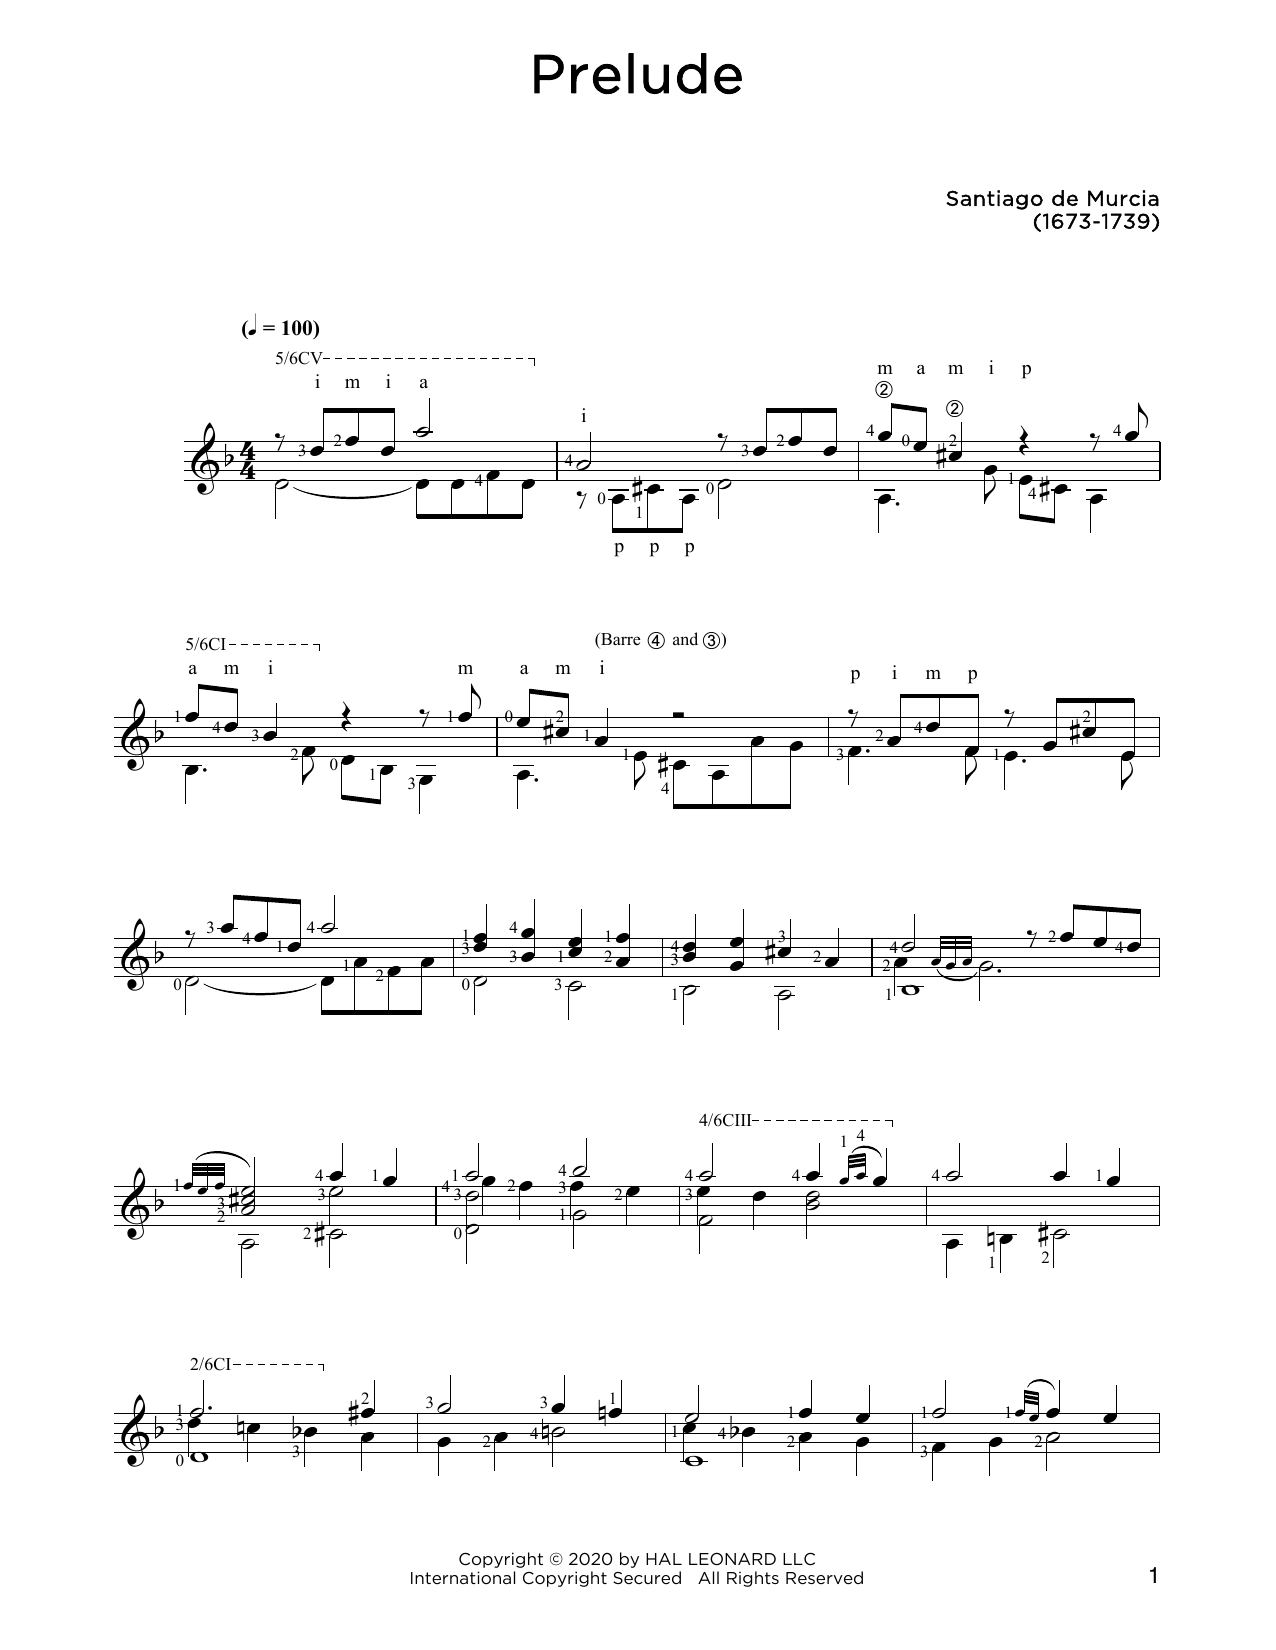 Santiago de Murcia Prelude Sheet Music Notes & Chords for Solo Guitar - Download or Print PDF